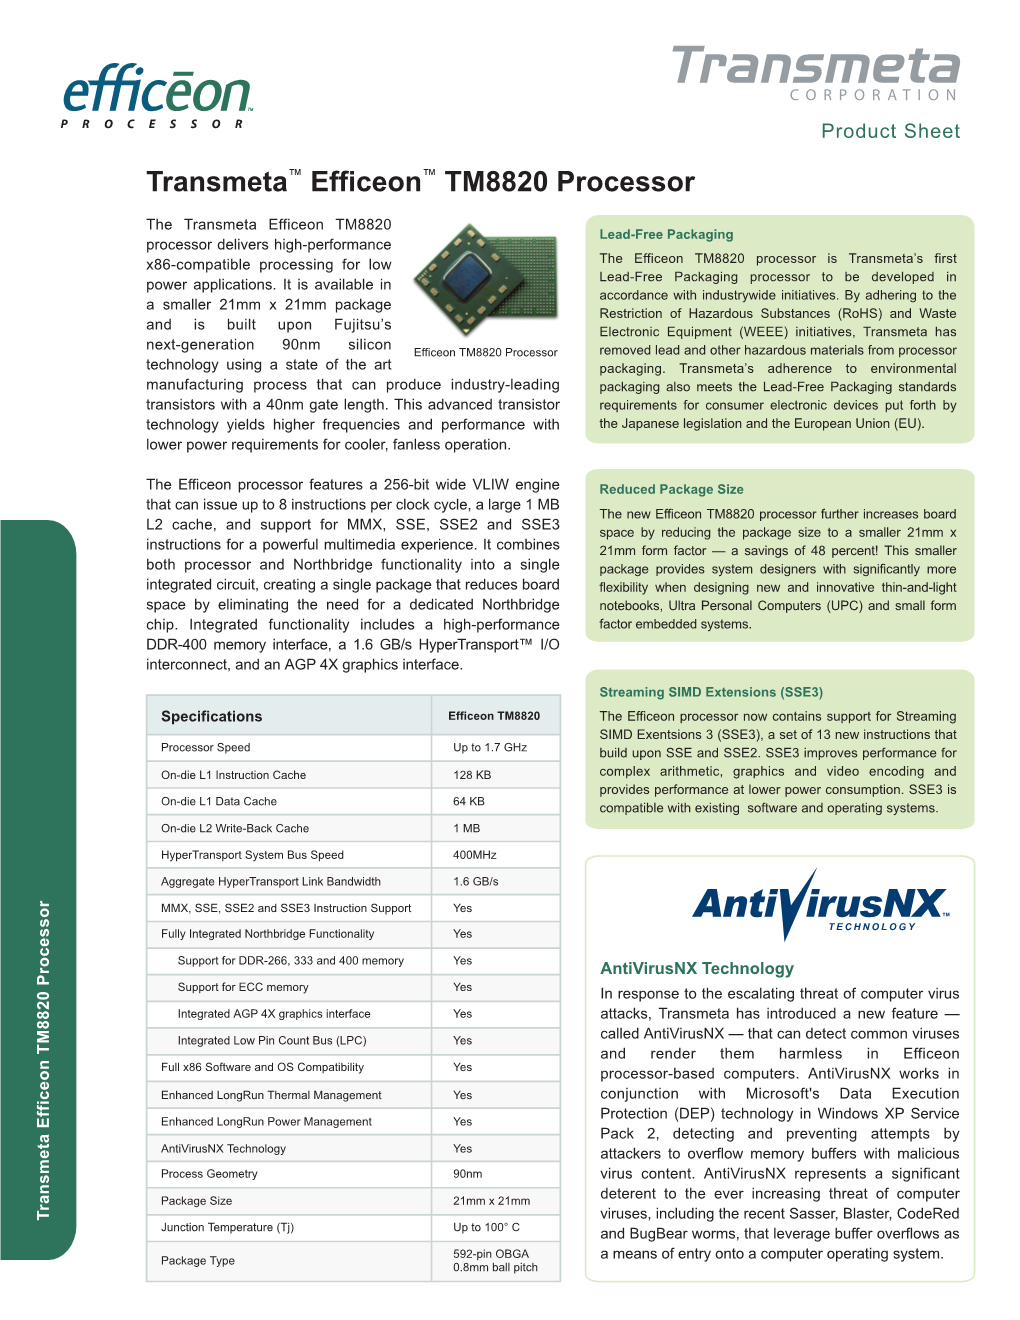 Transmeta Efficeon TM8820 Processor Interconnect, Andanagp 4Xgraphics Interface